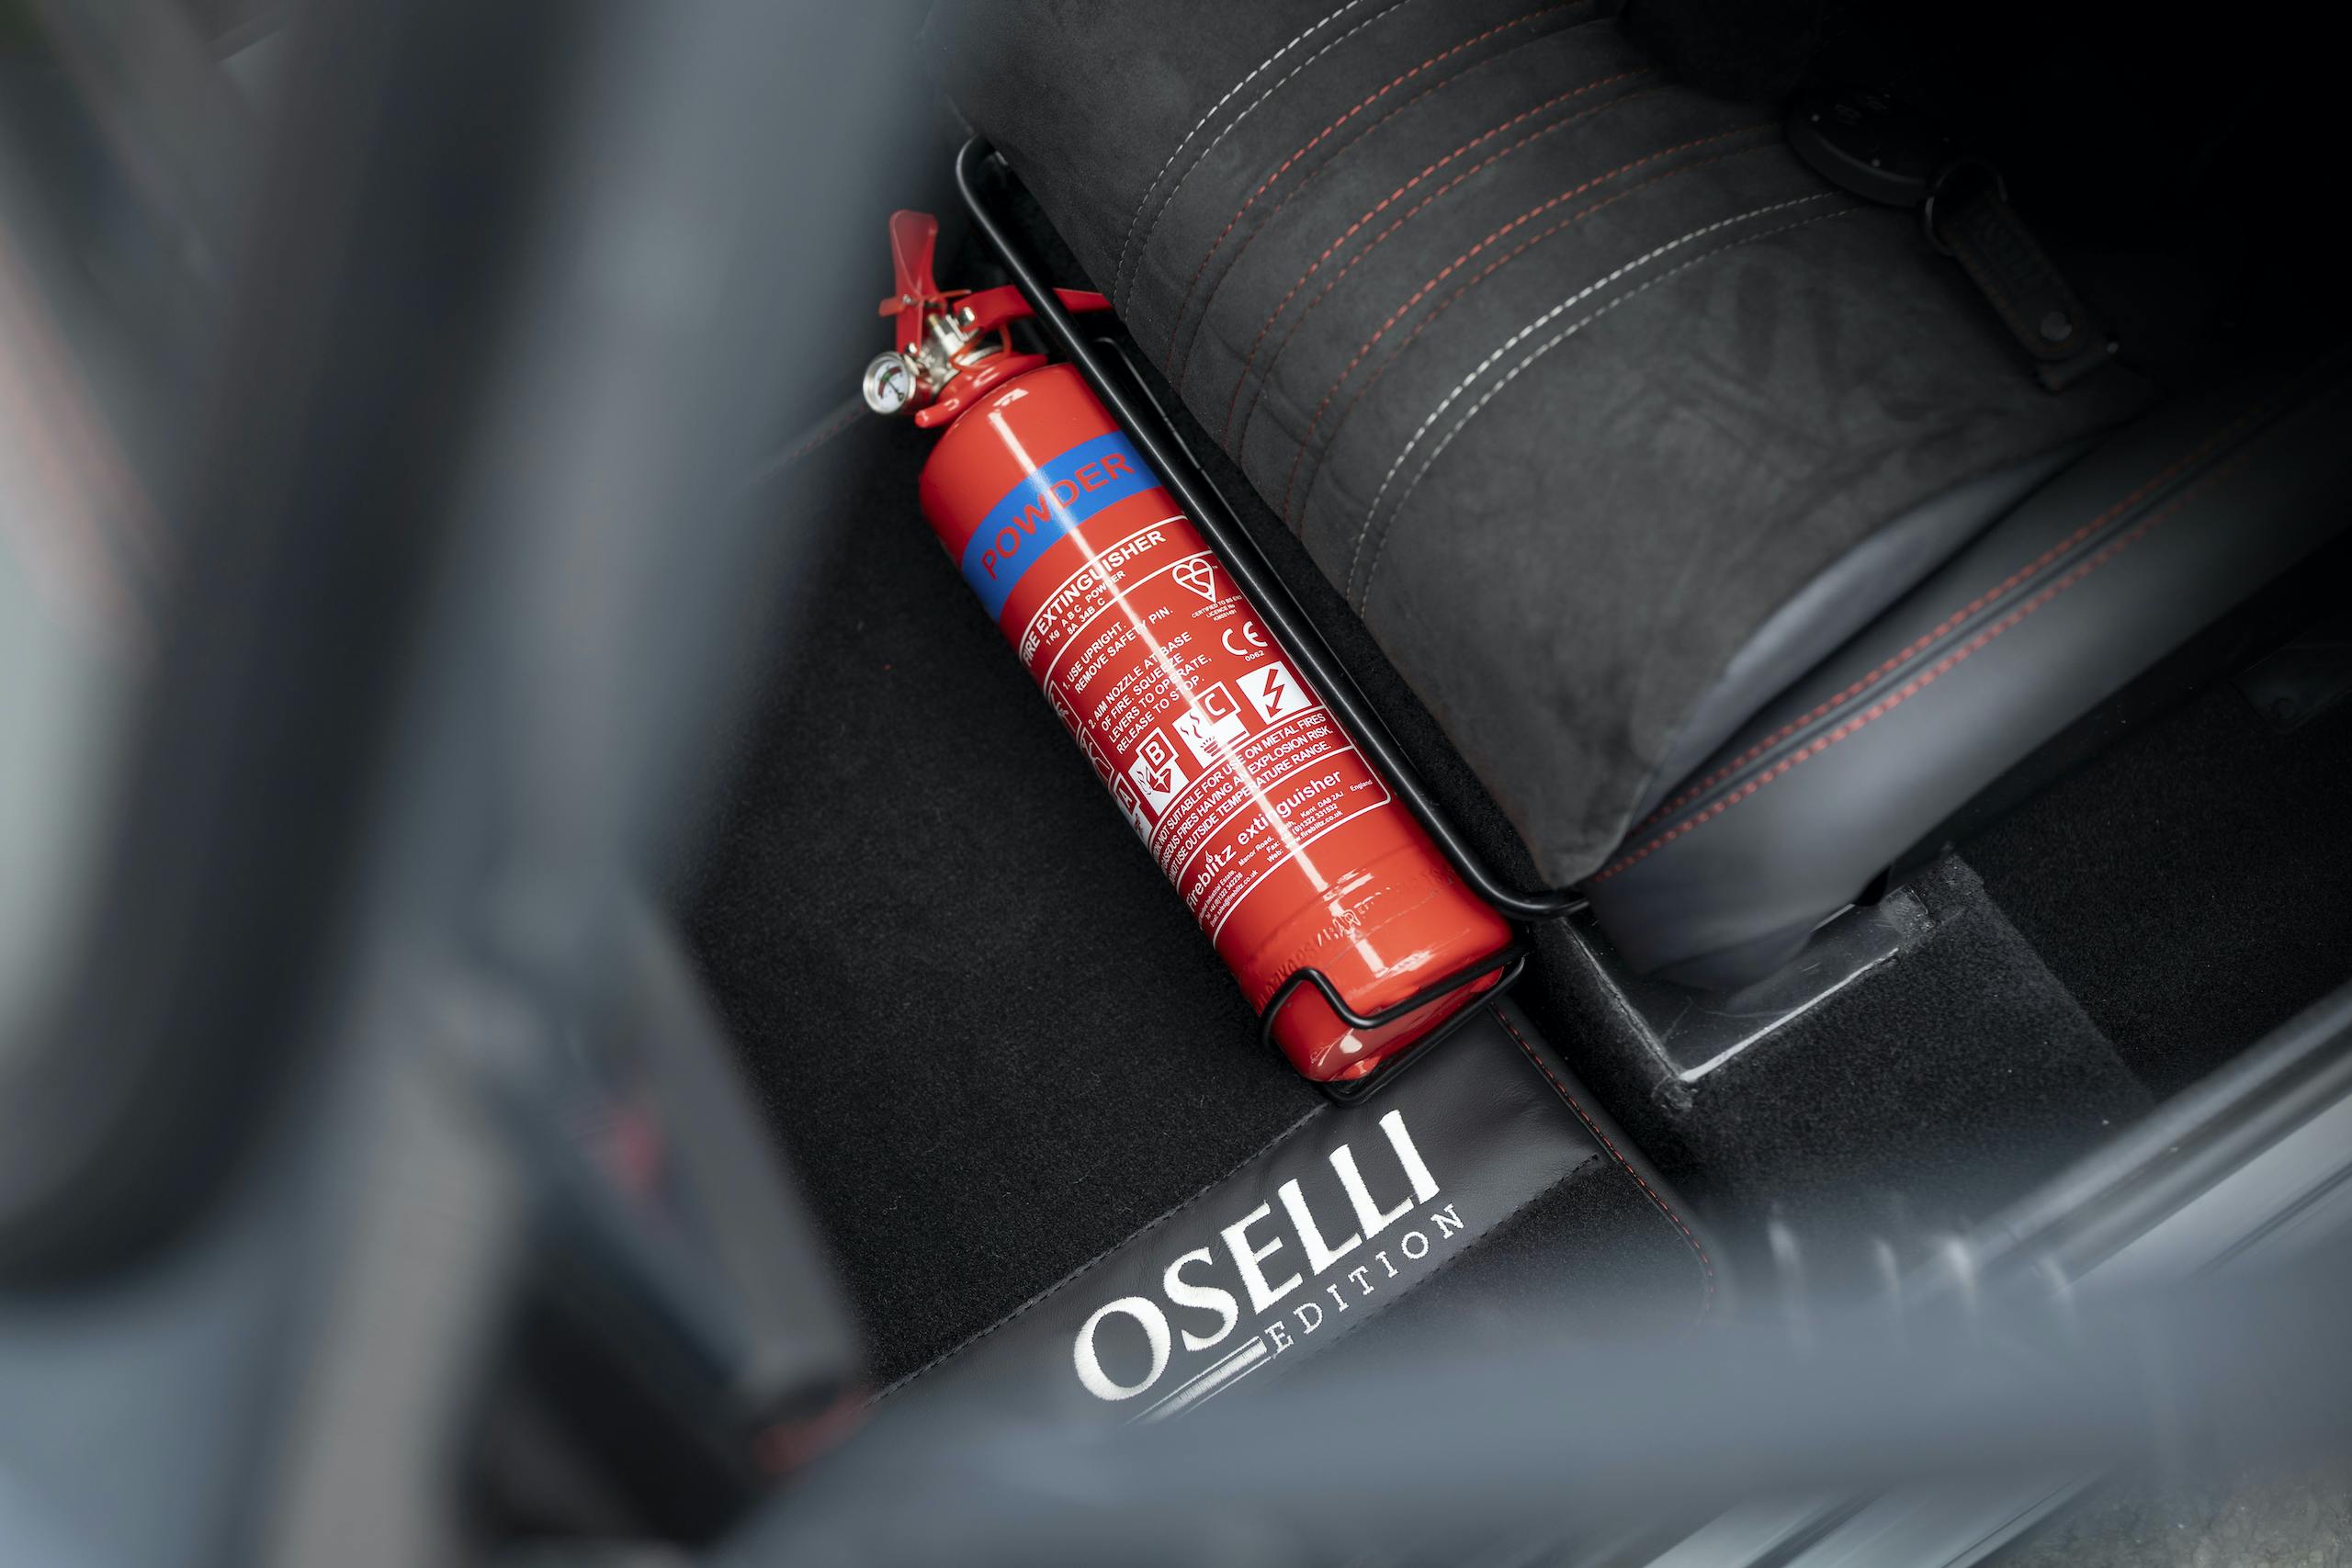 Mini Remastered Oselli Edition fire extinguisher